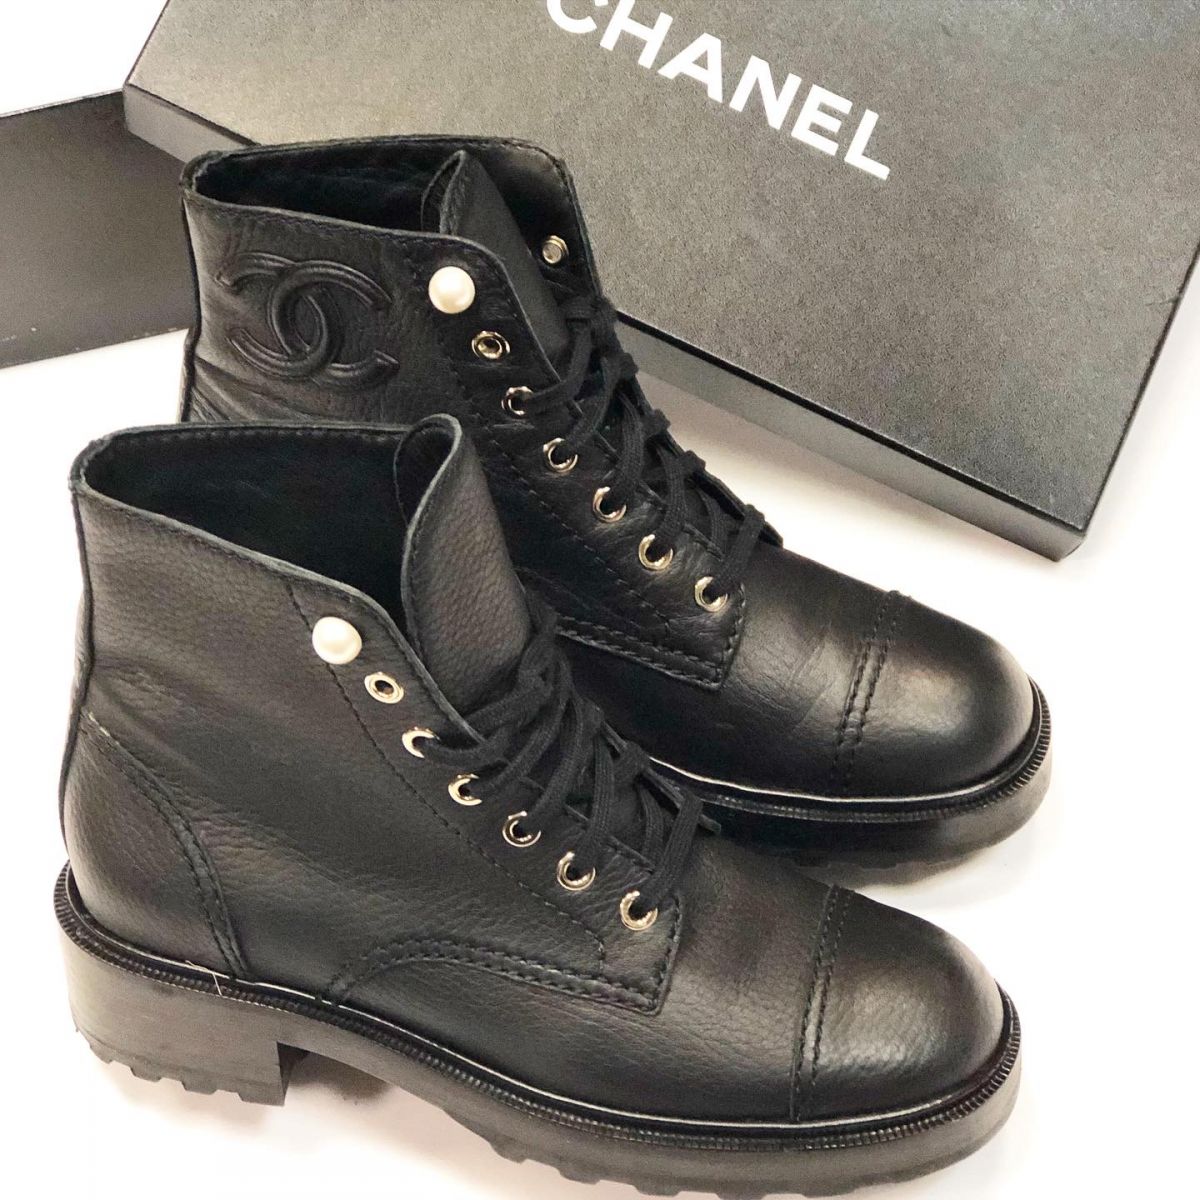 Ботинки Chanel размер 39 цена 38 463 руб 